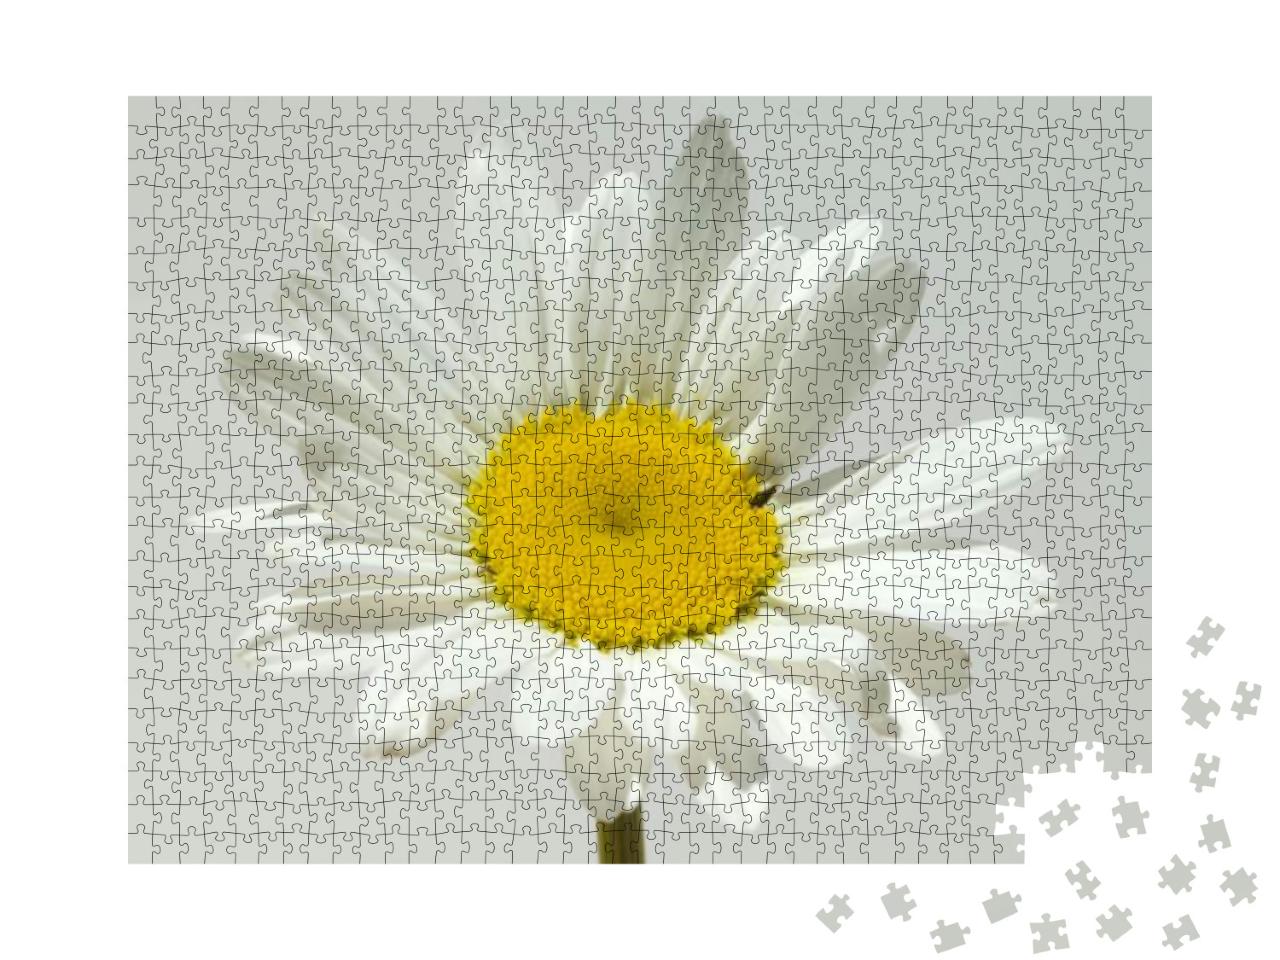 Puzzle 1000 Teile „Wiesenschaumkraut Leucanthemum vulgare“